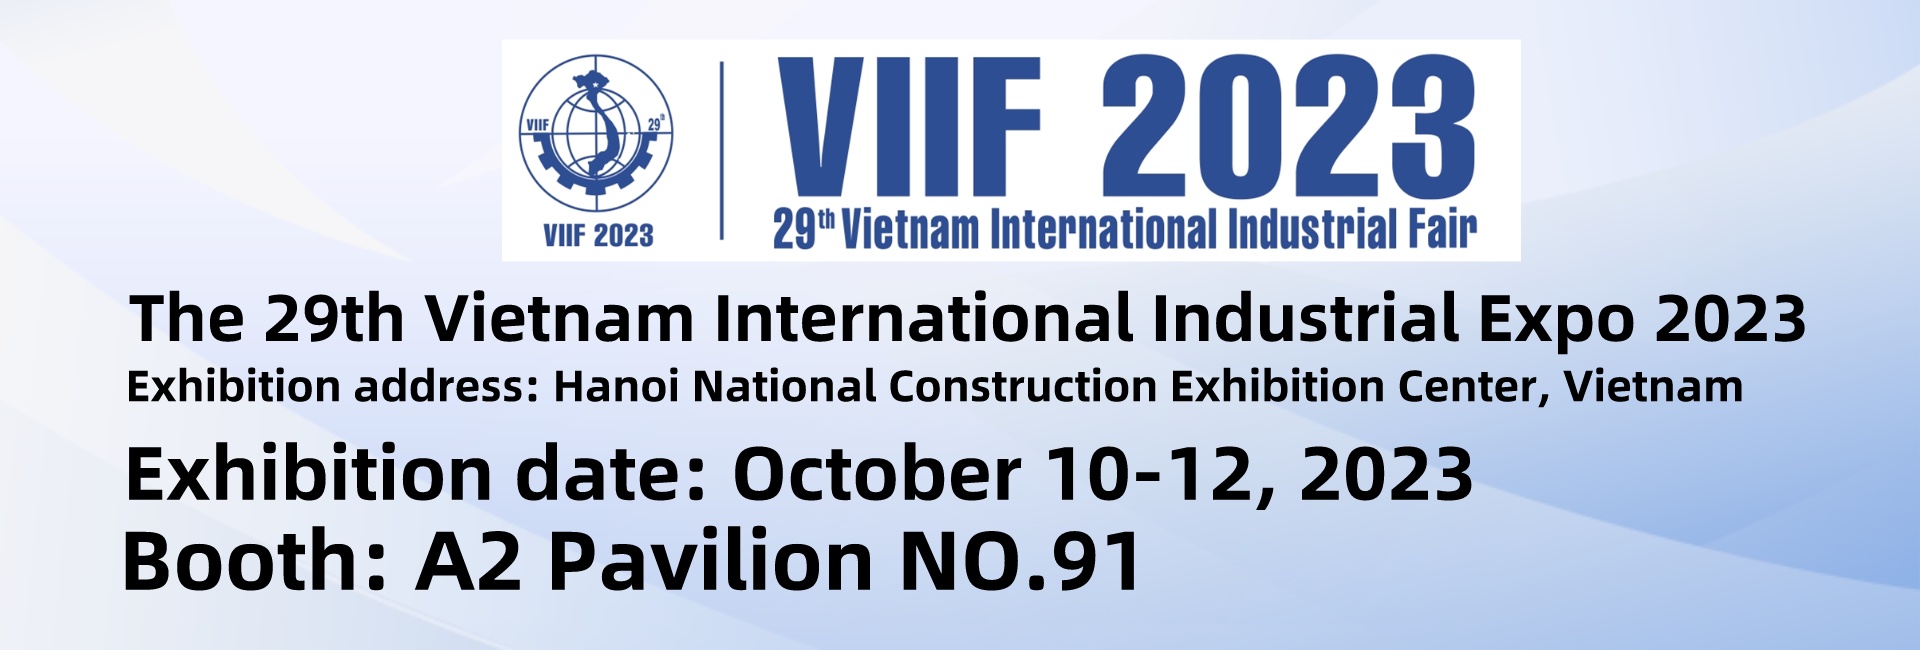 De 29e Fietnam International Industrial Expo 2023